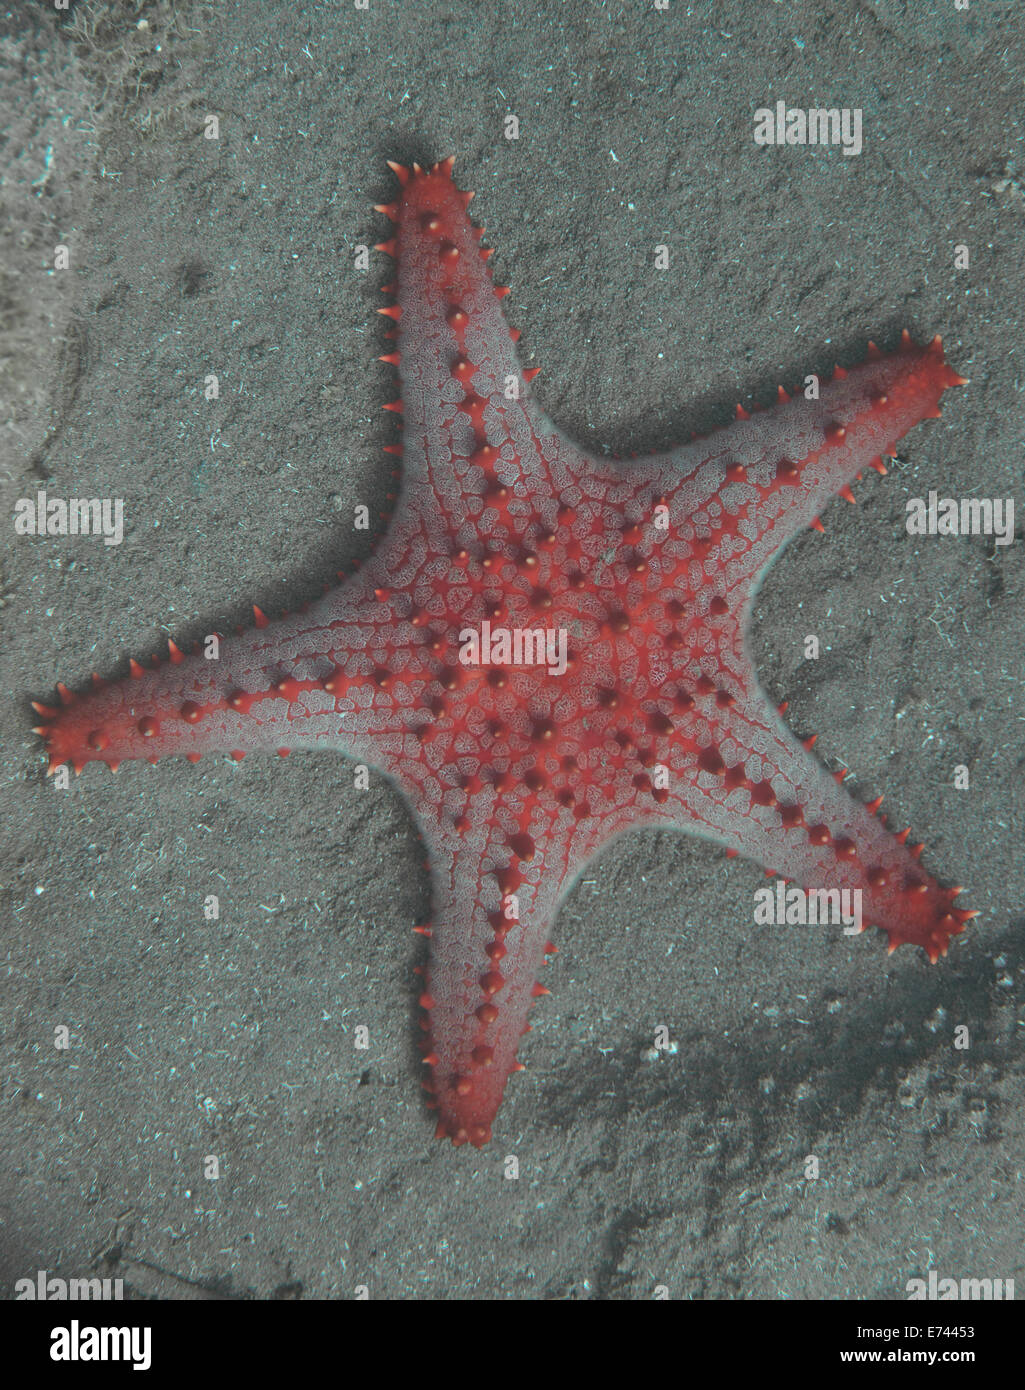 Knobbed starfish on the ocean floor Stock Photo